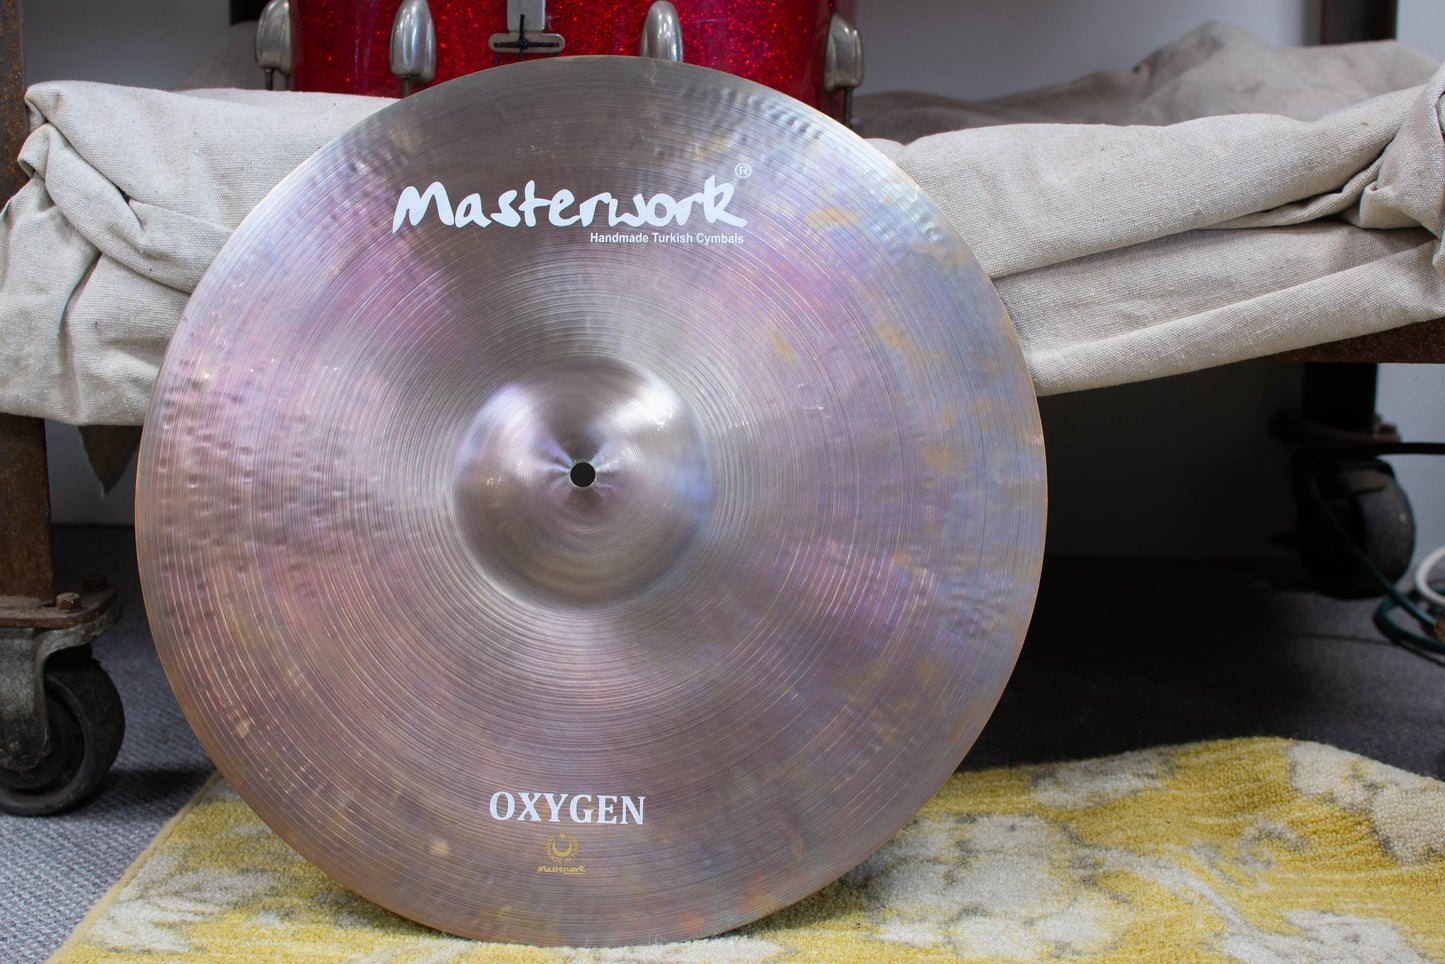 Masterwork Oxygen 19" Extra Thin Crash Cymbal 1556g